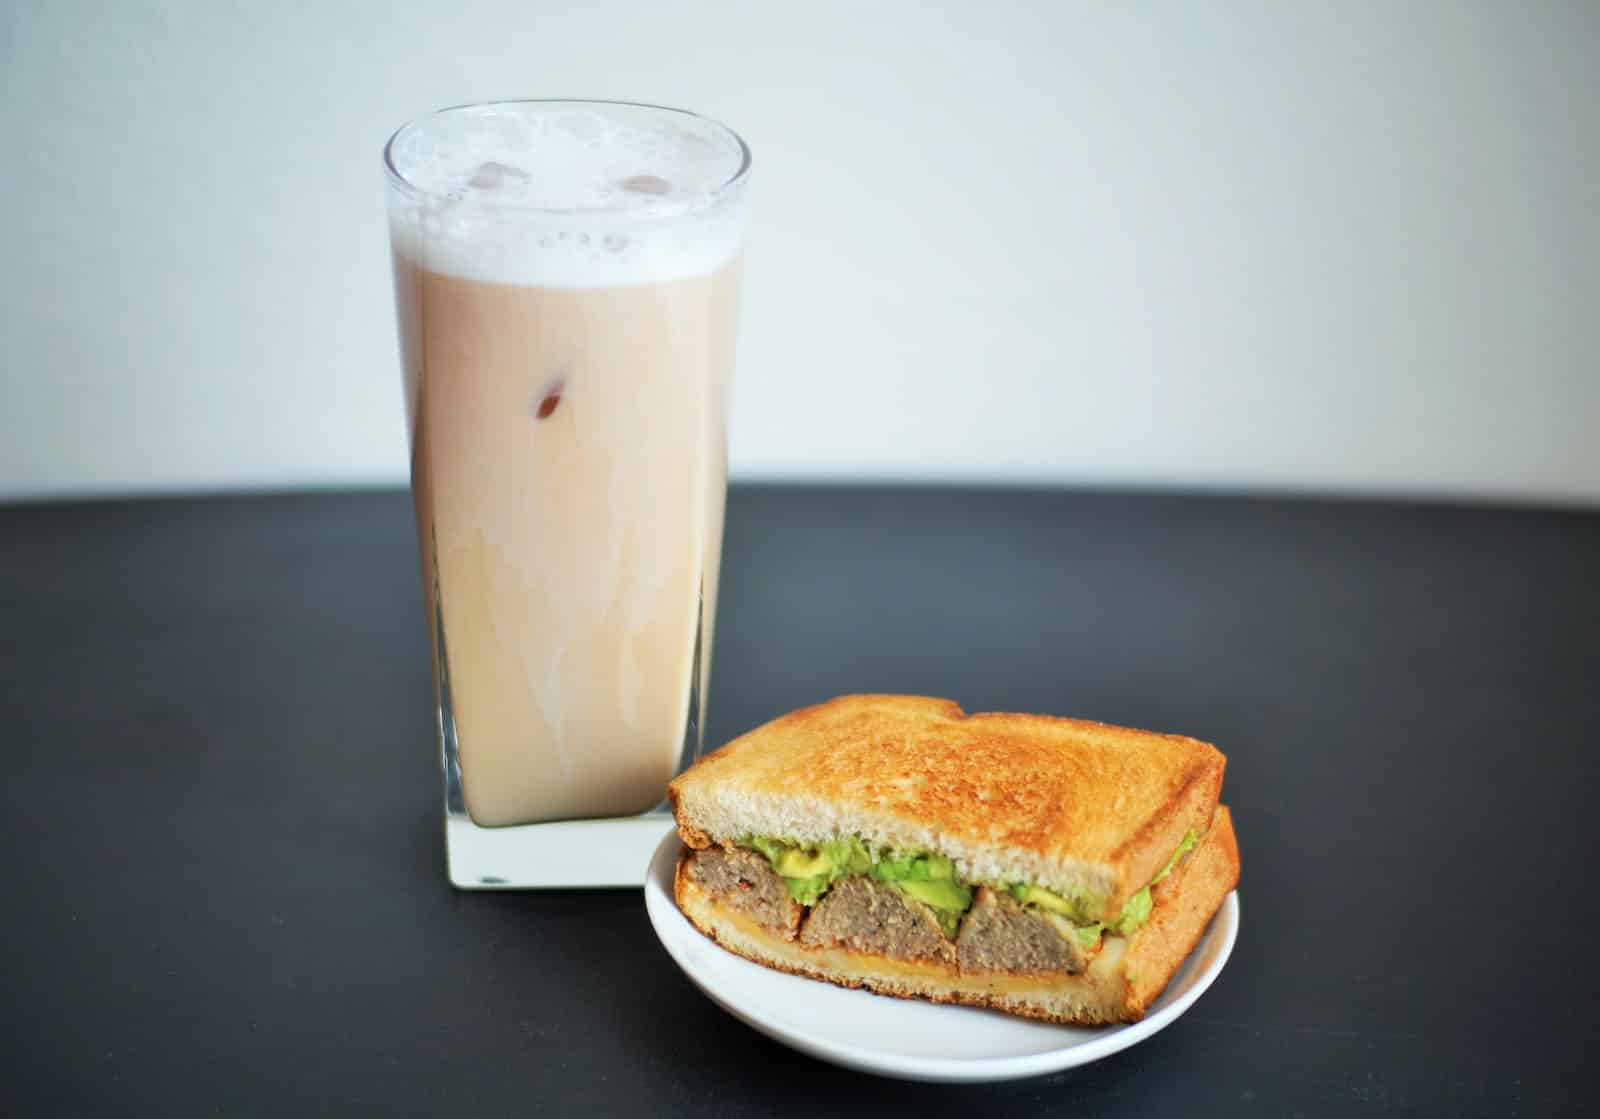 filled drinking glass beside a sliced sandwich